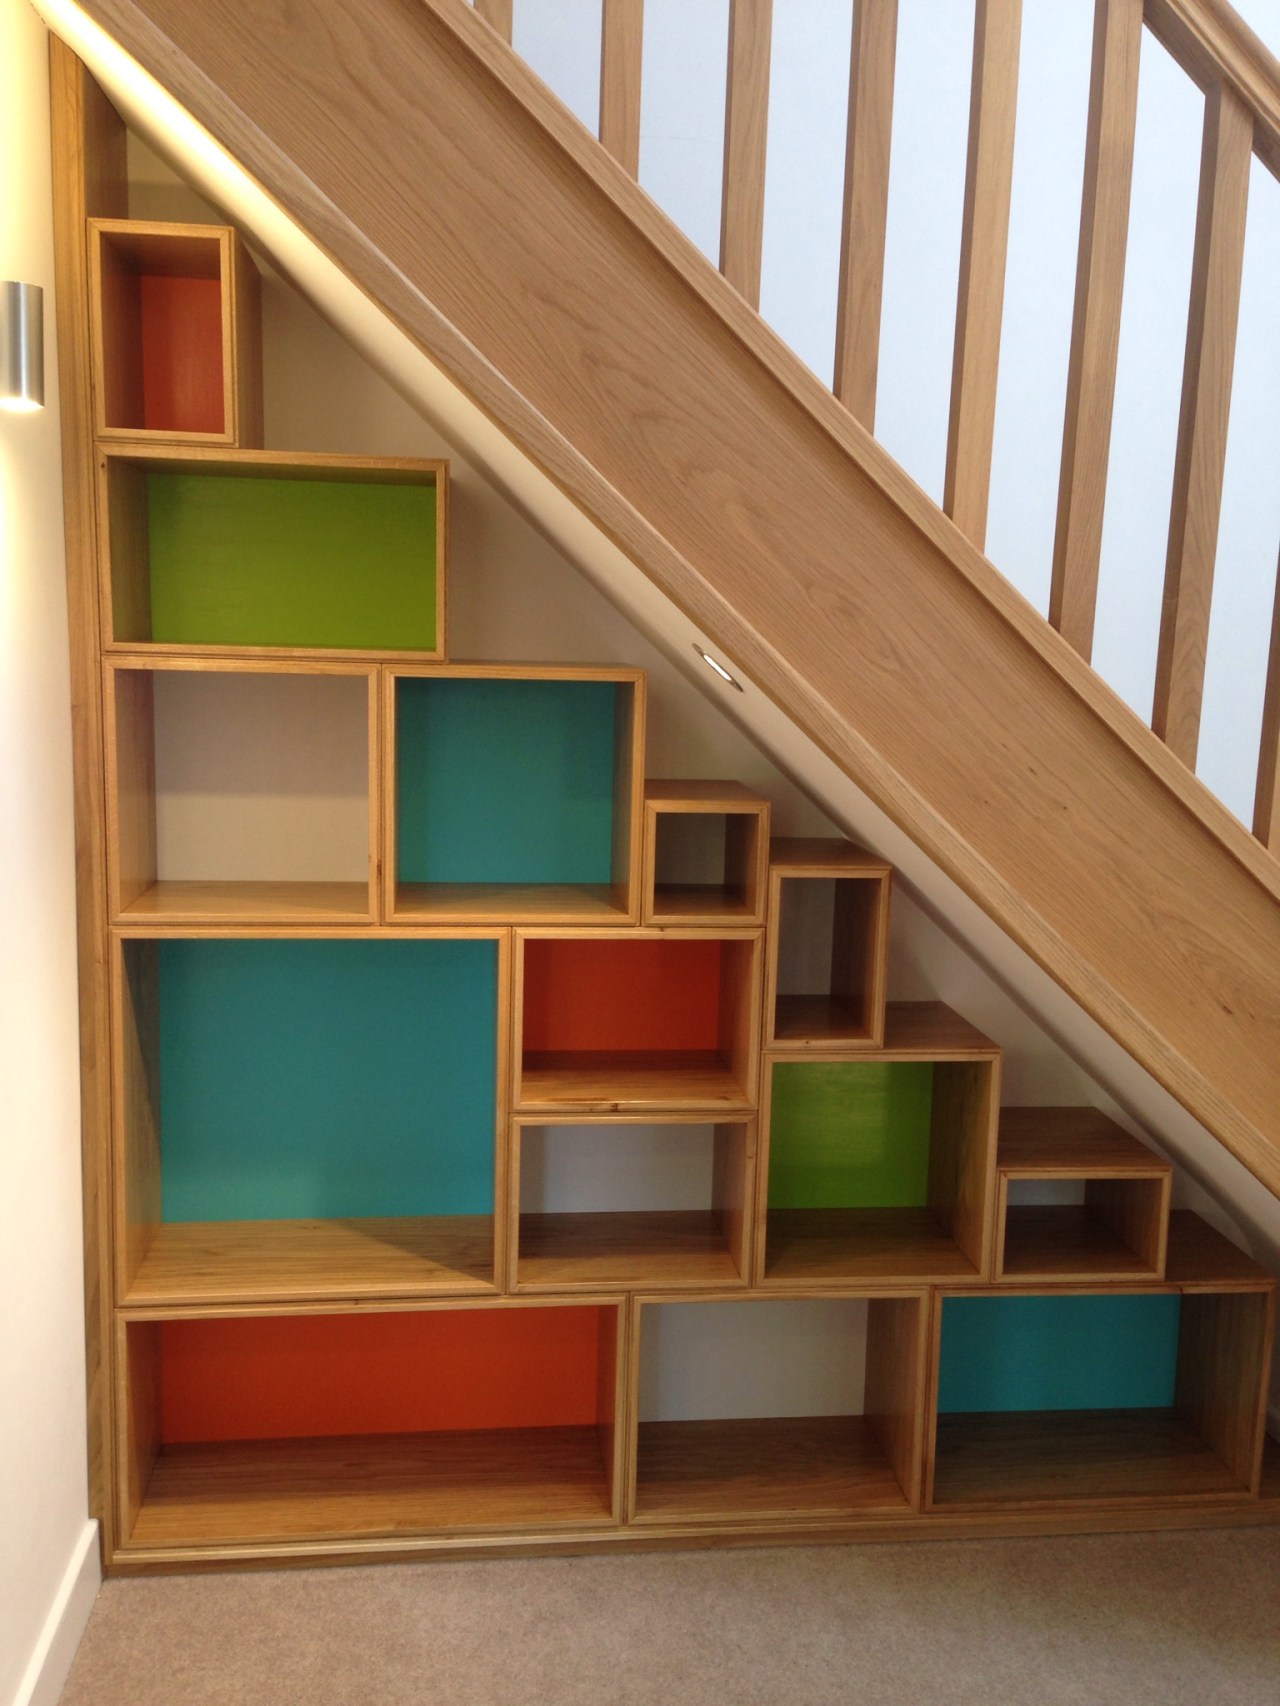 Under Stairs Storage Solutions Home Design Ideas